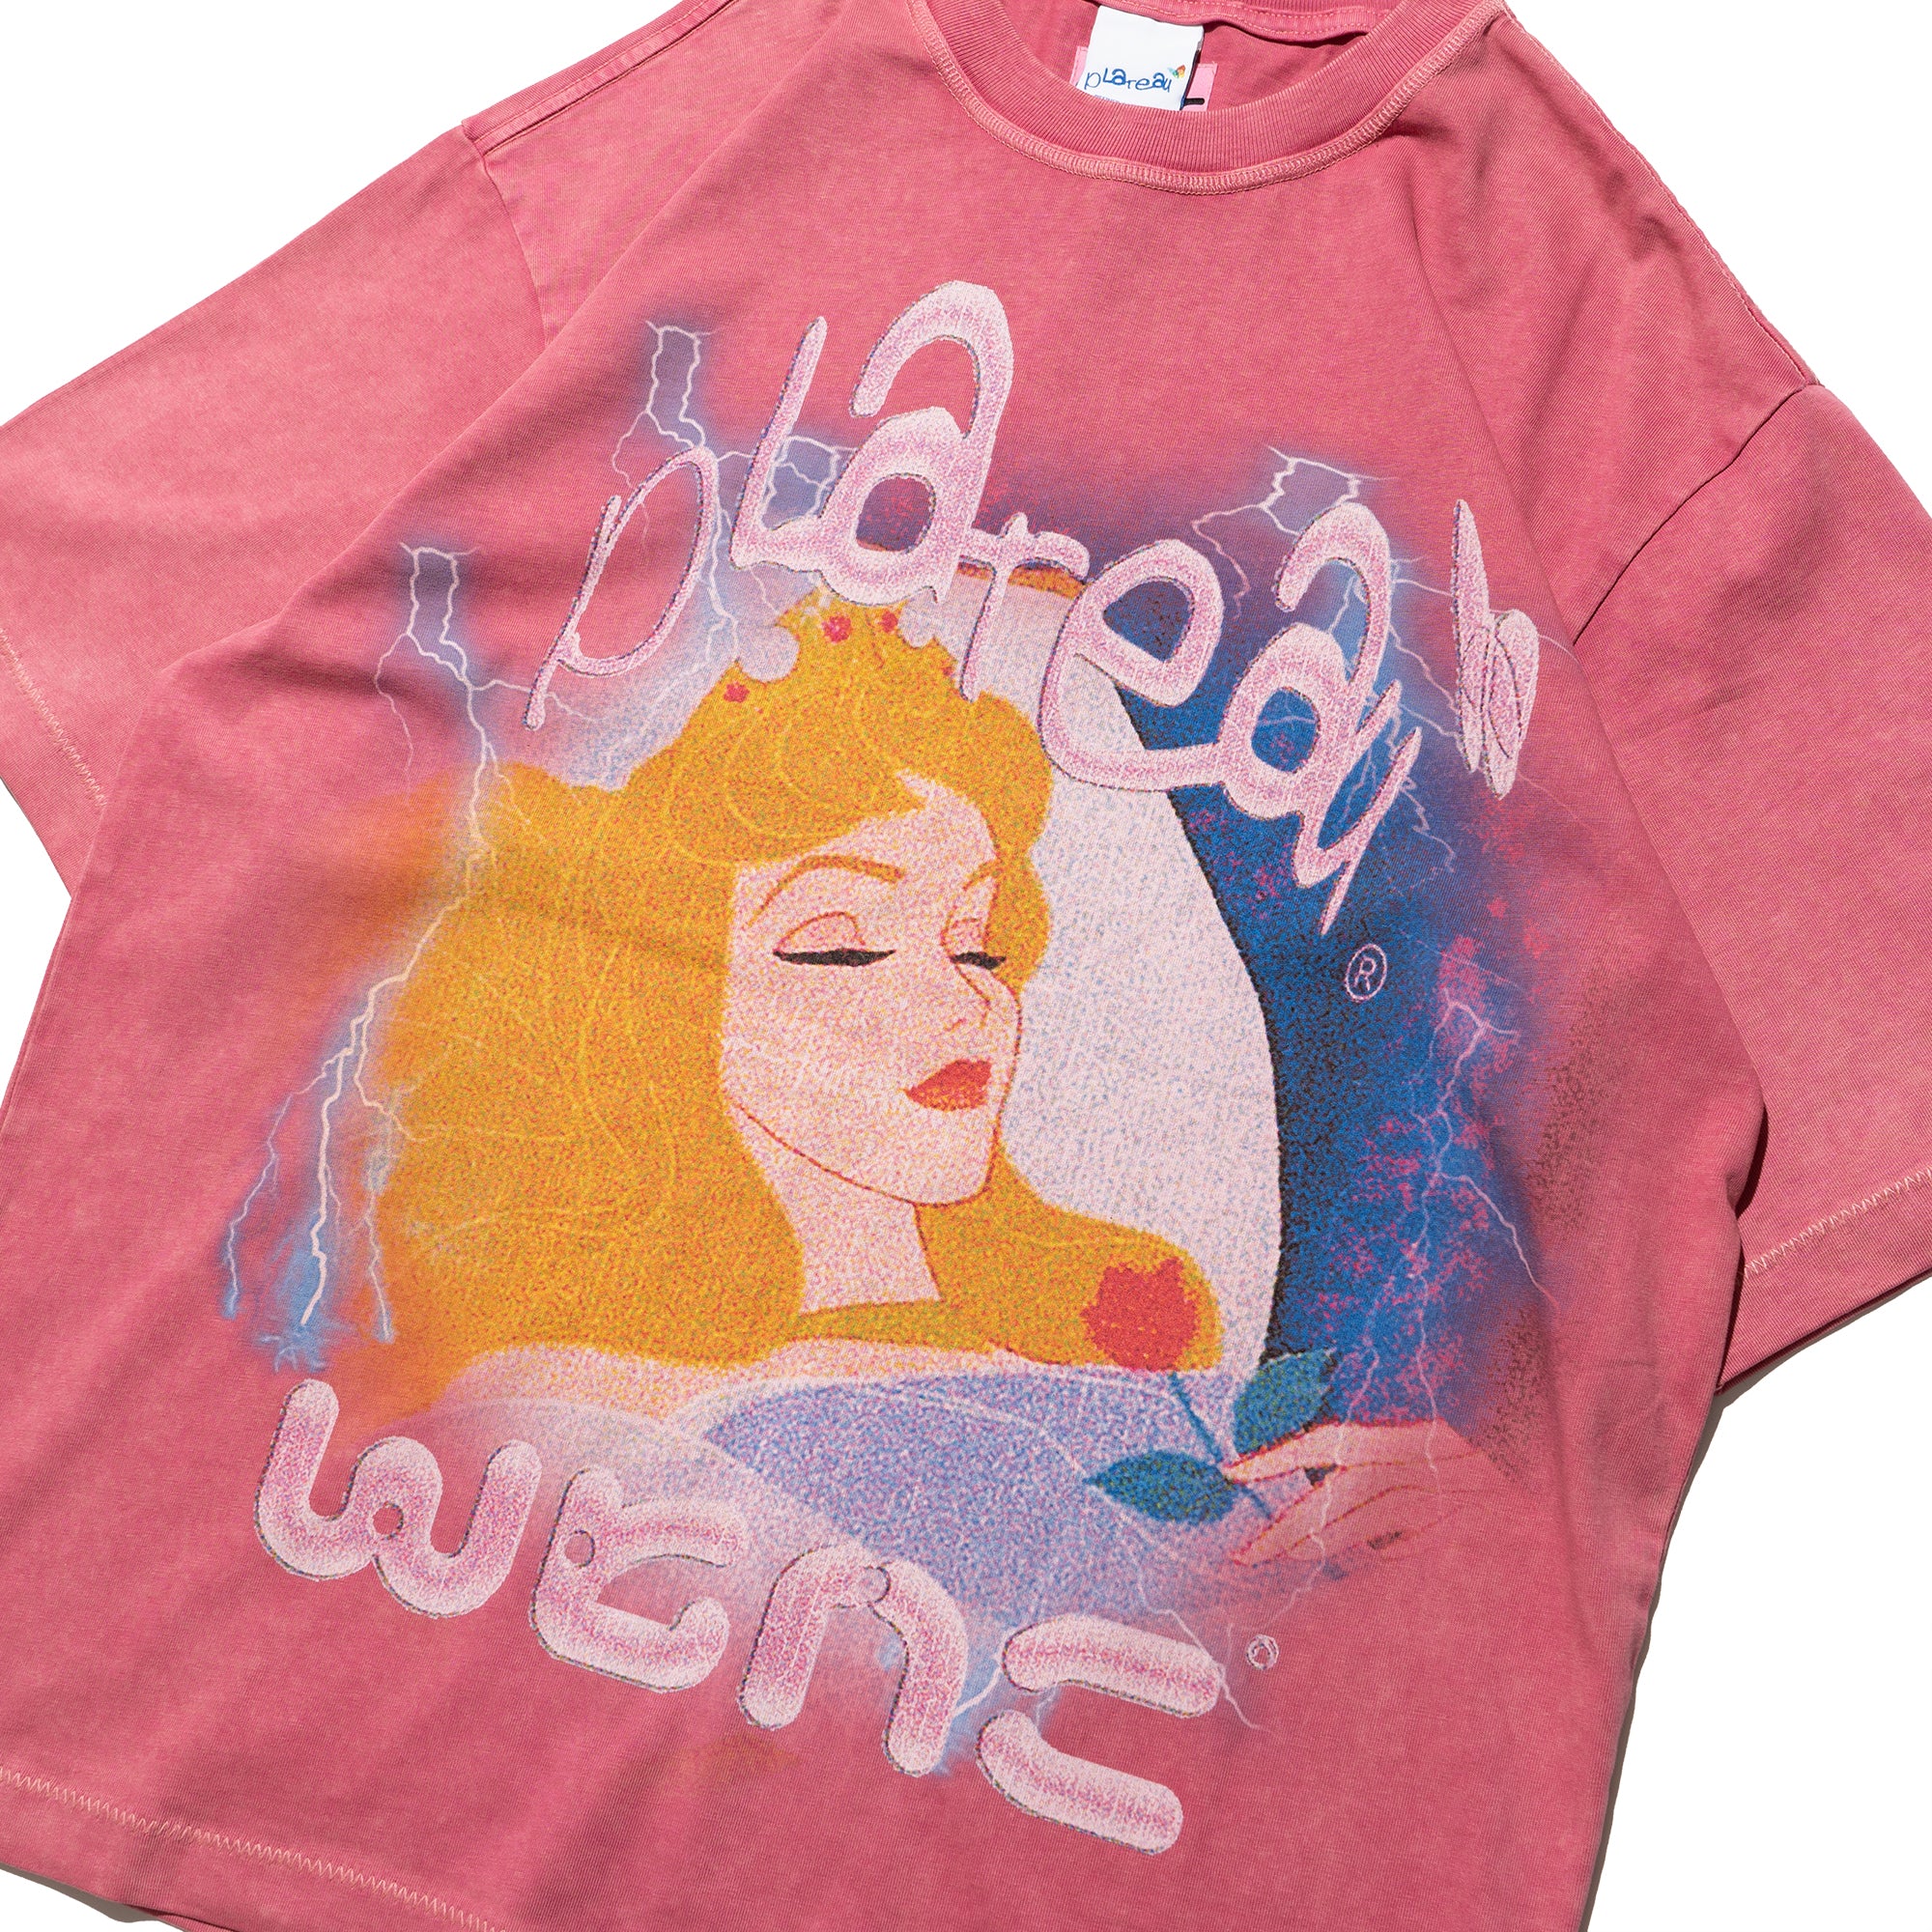 WTNC x Plateau Studio "Sleeping Beauty" shirt